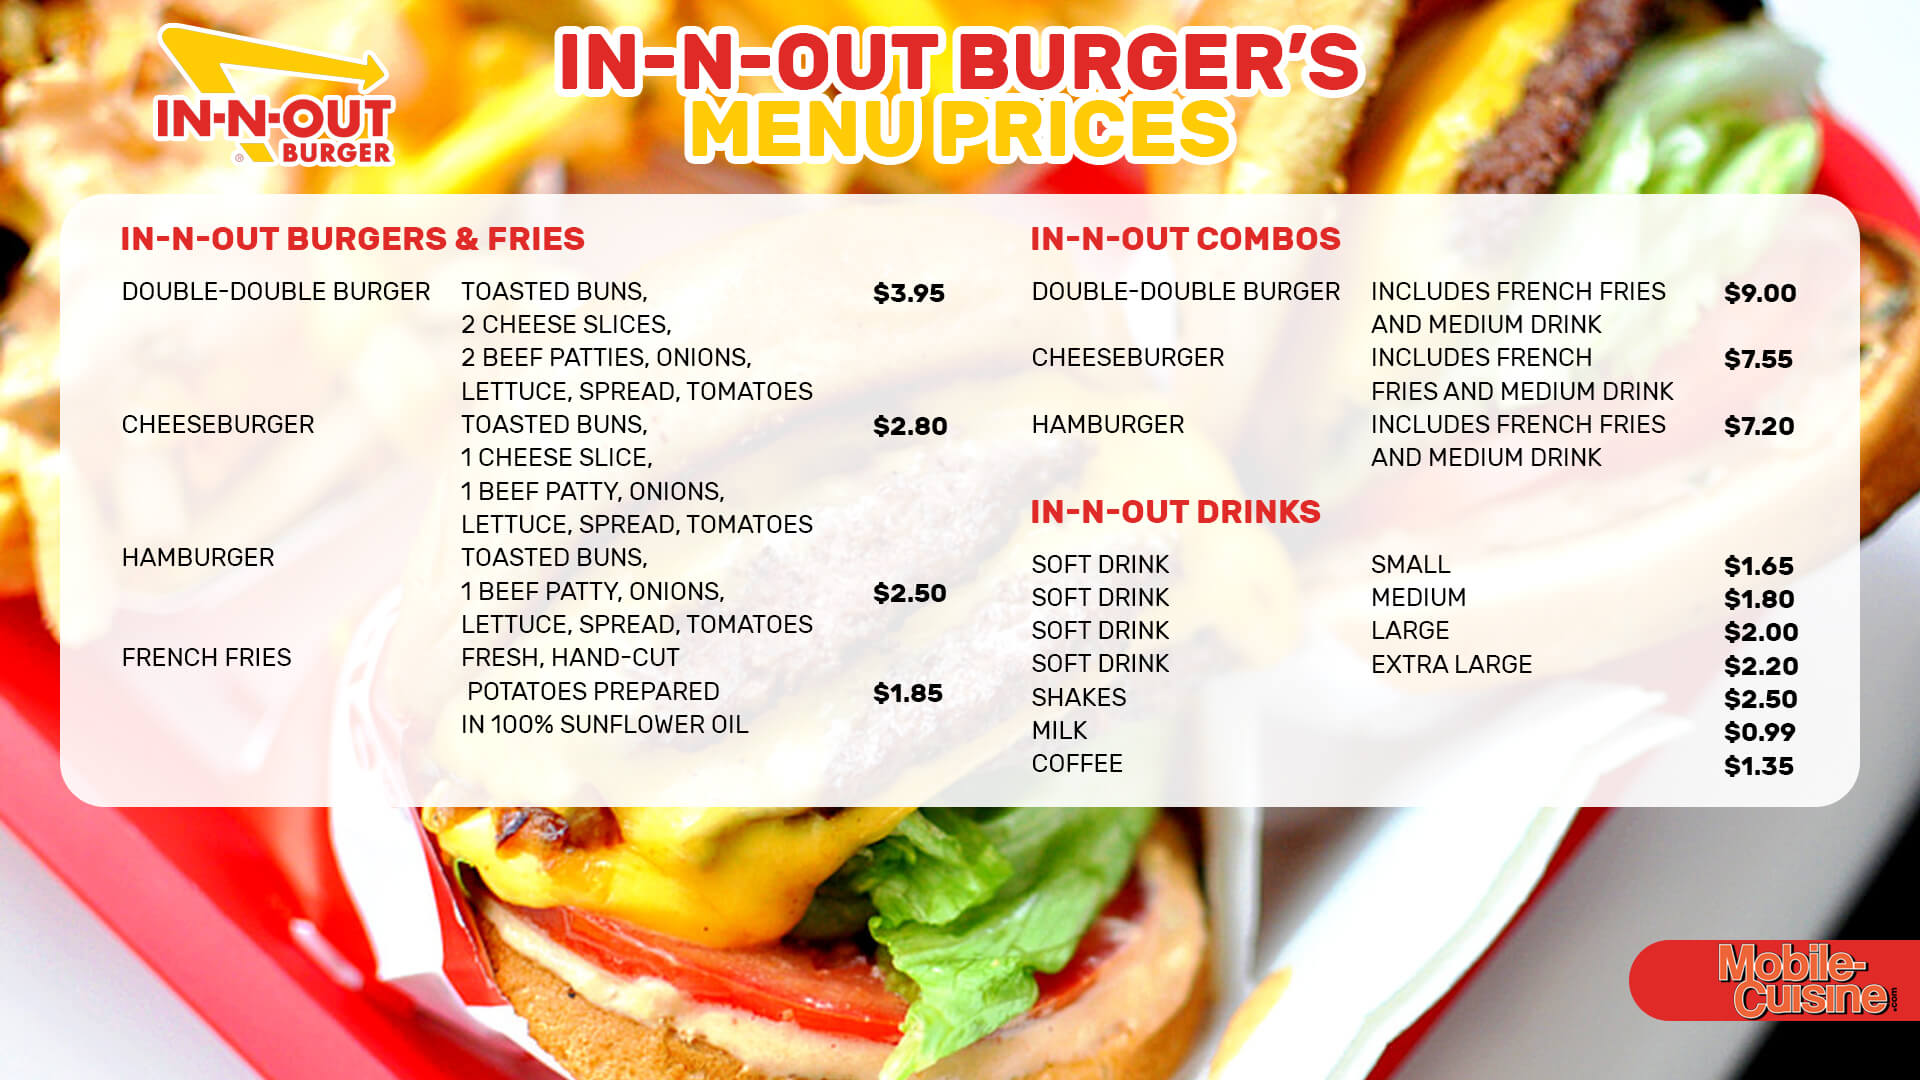 In-N-Out Burger menu prices